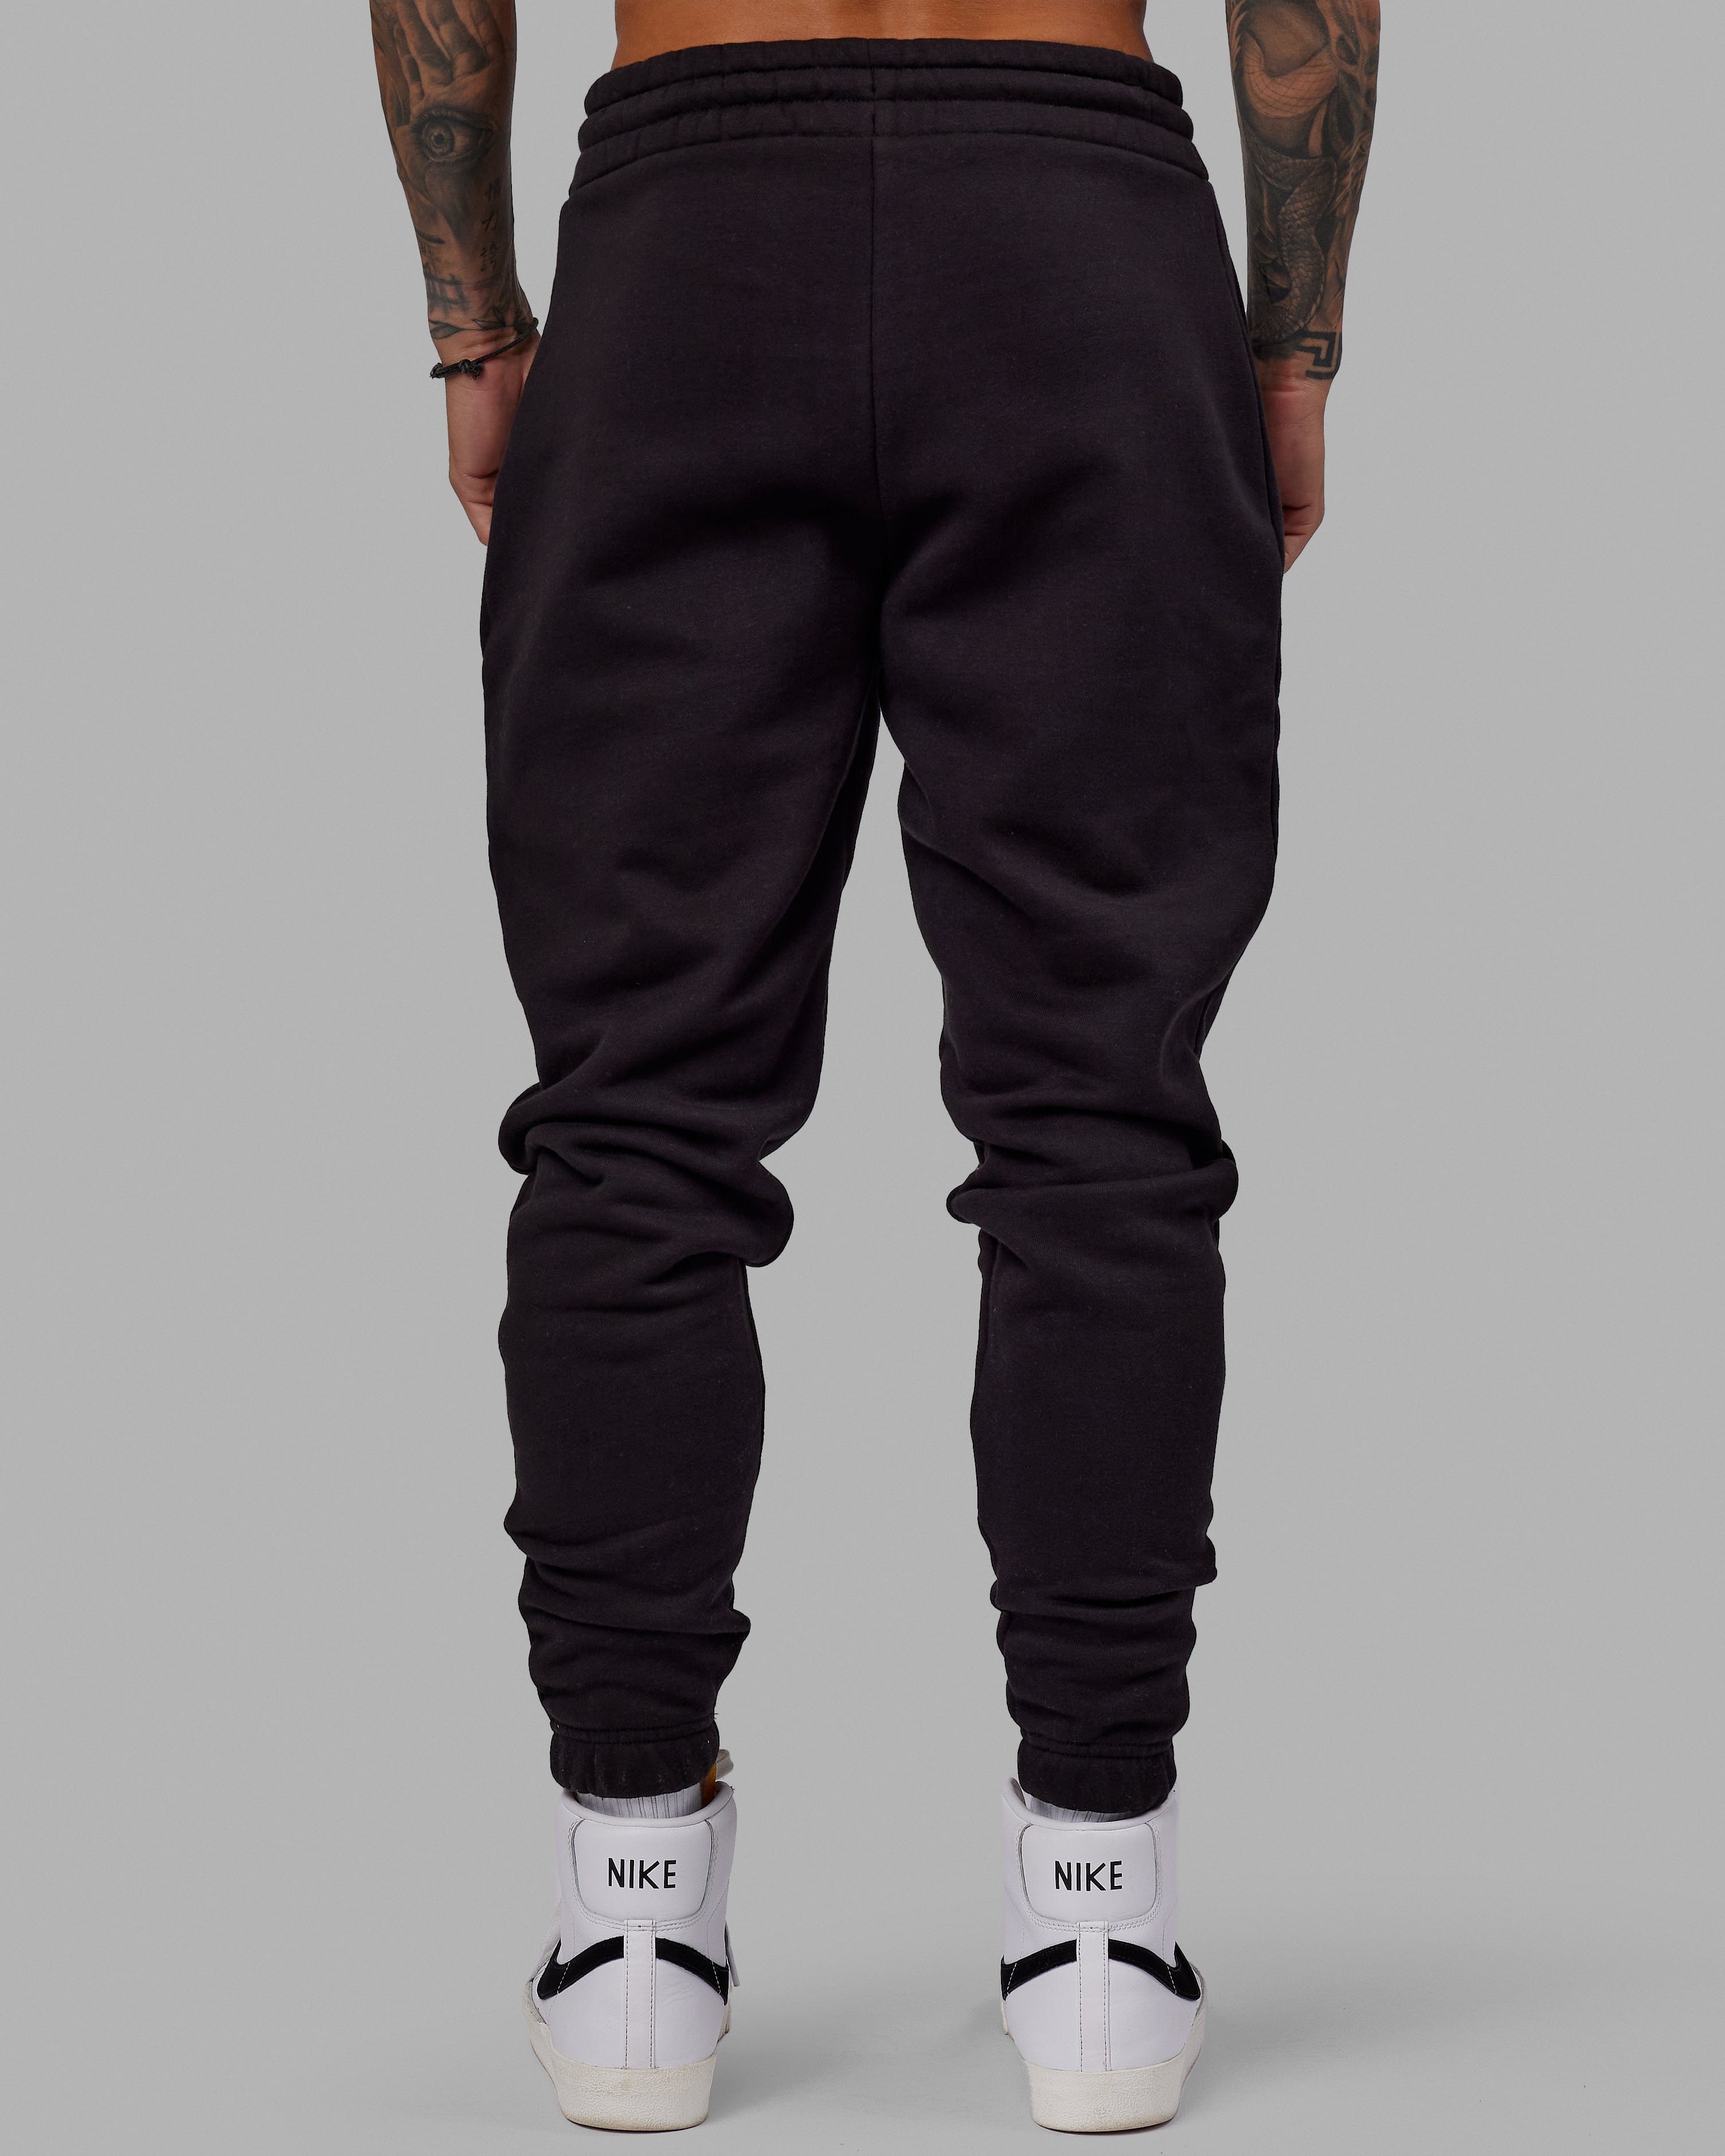 Buy Men's CAGO Pants Plus Size Hiphop Punk Camo Jogger Sport Harem Pants  Ankle Length Multi-Pockets at Amazon.in